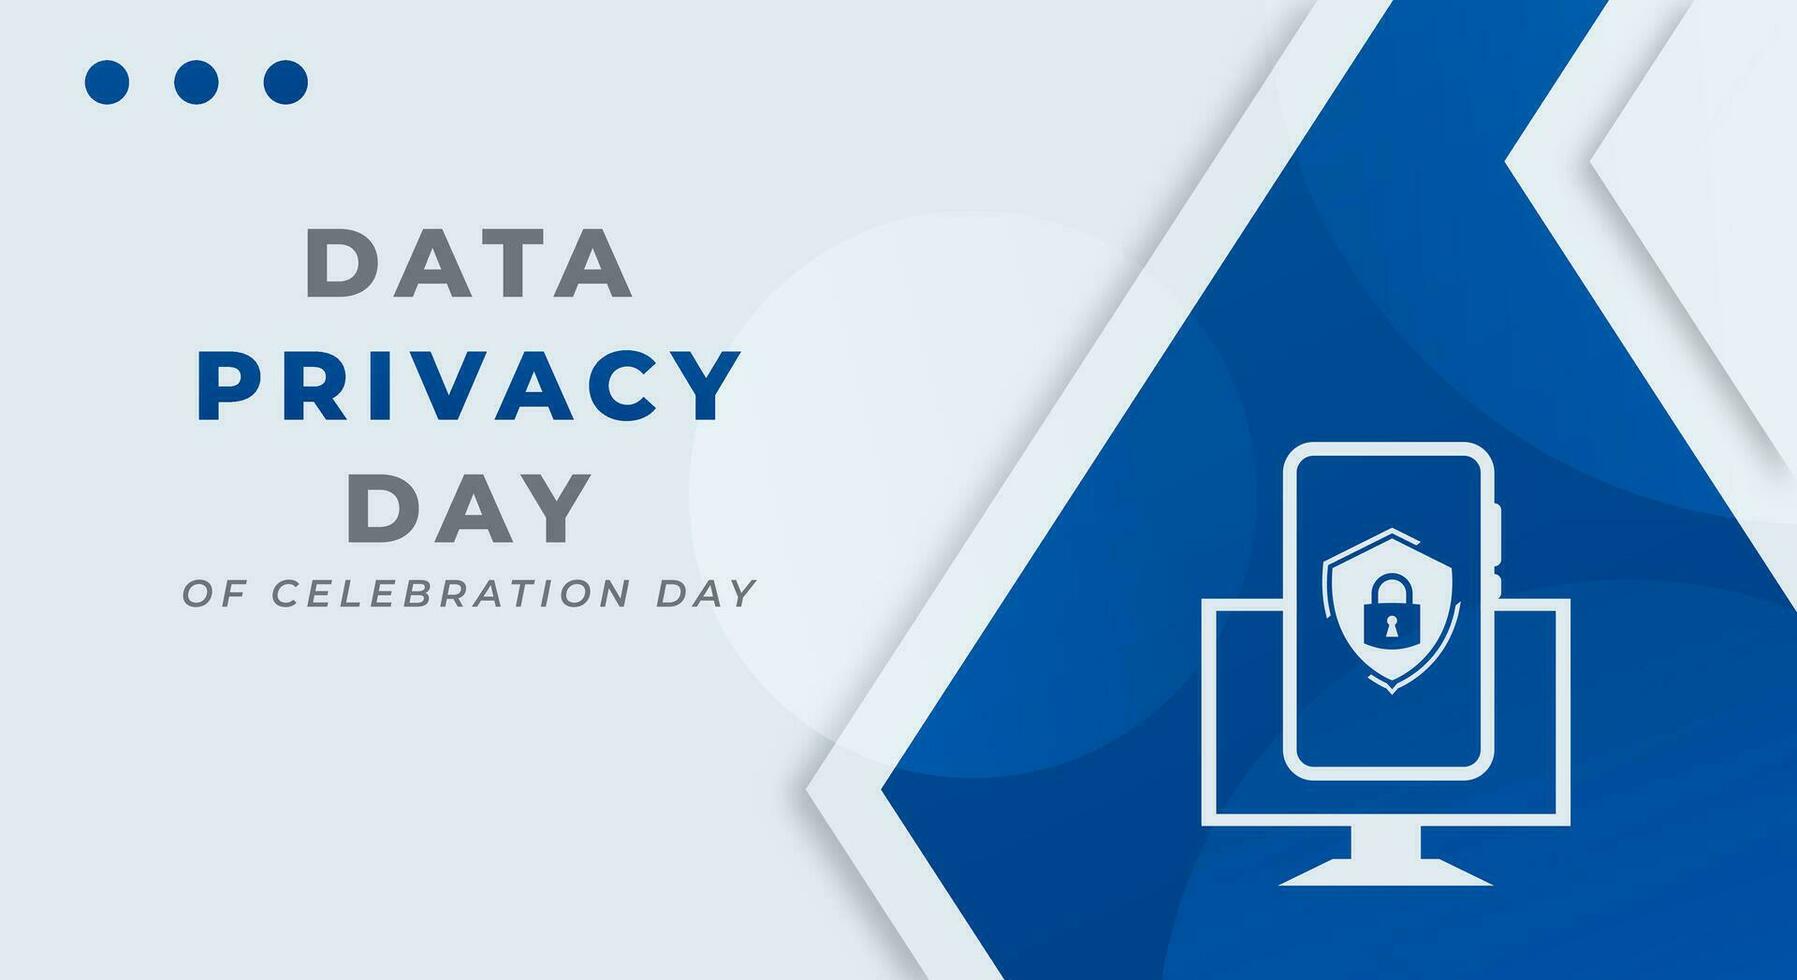 Data Privacy Day Celebration Vector Design Illustration for Background, Poster, Banner, Advertising, Greeting Card